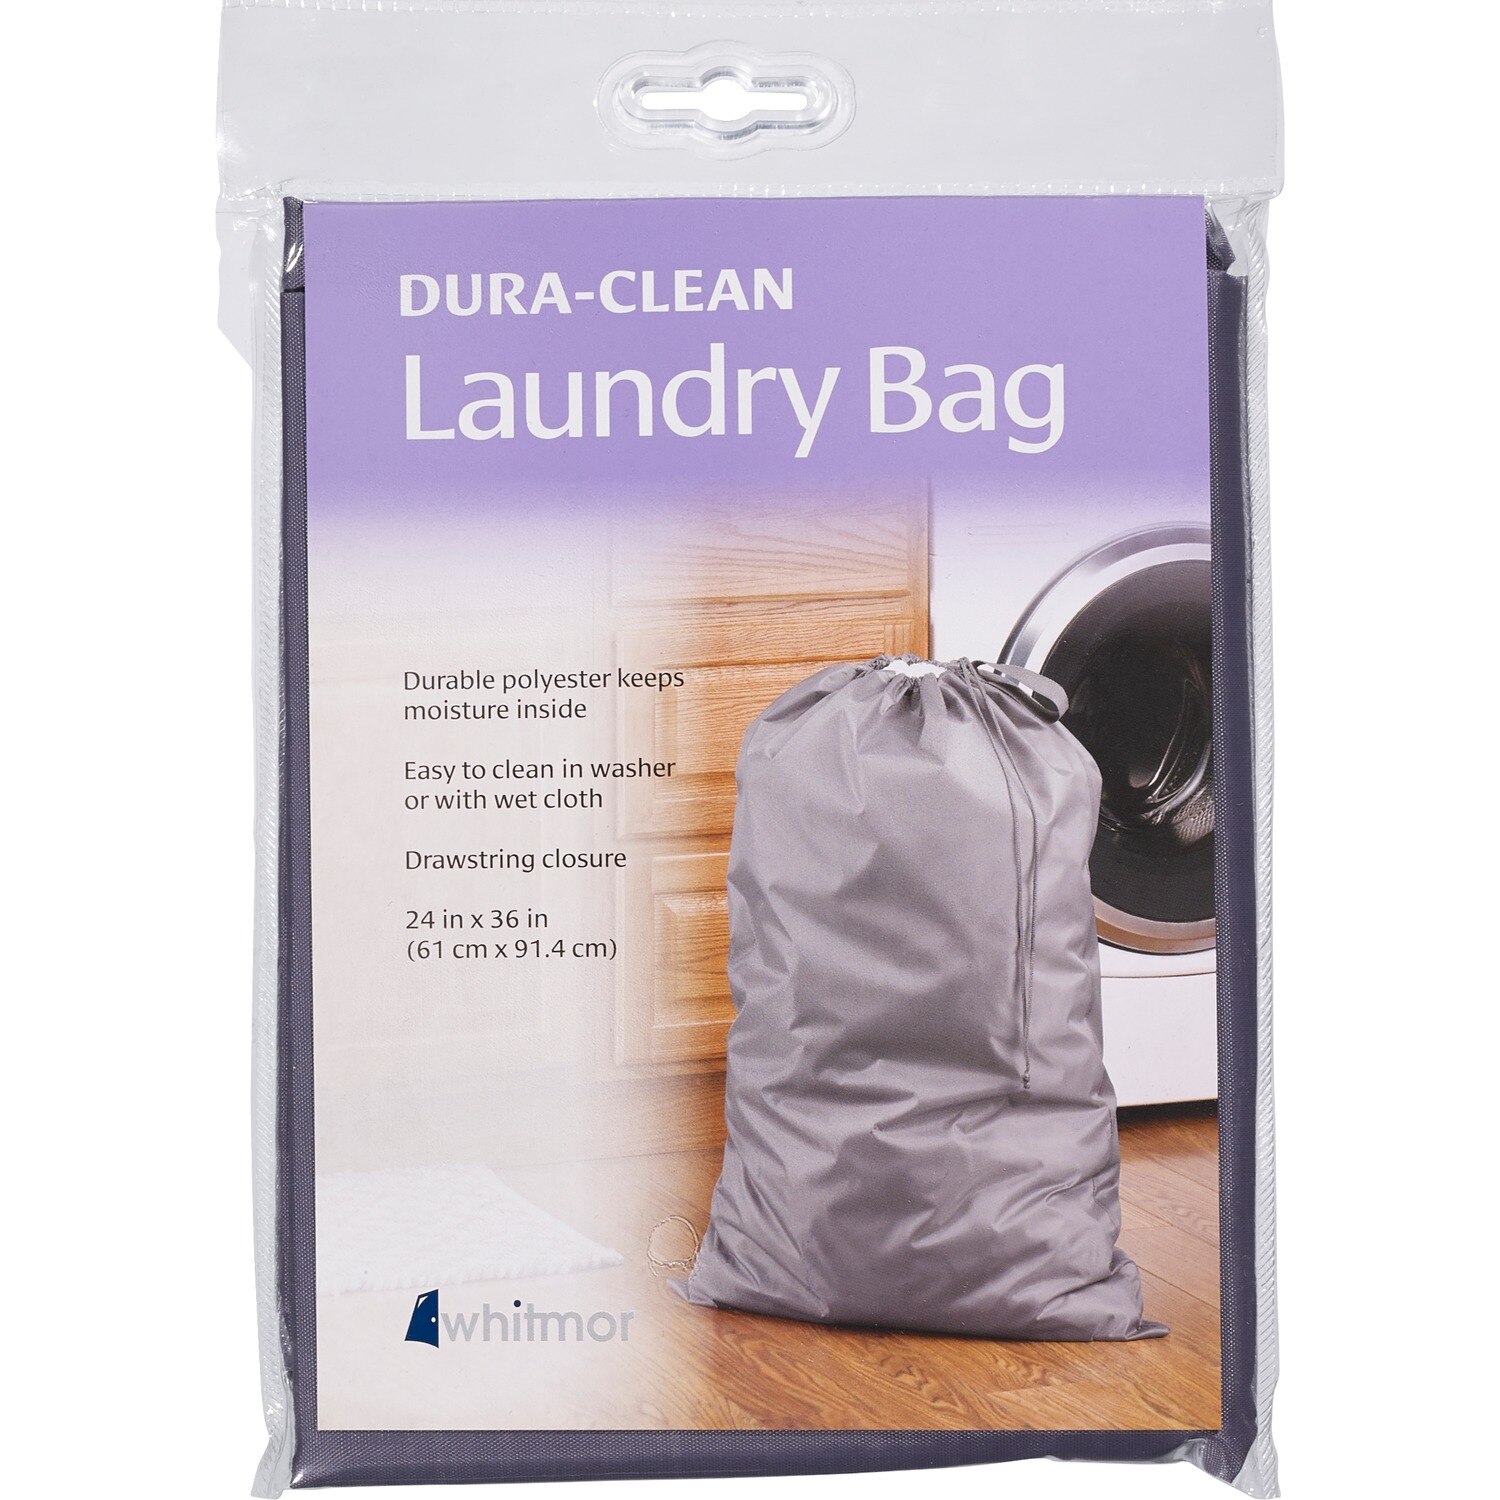 Whitmor Dura-Clean Laundry Bag